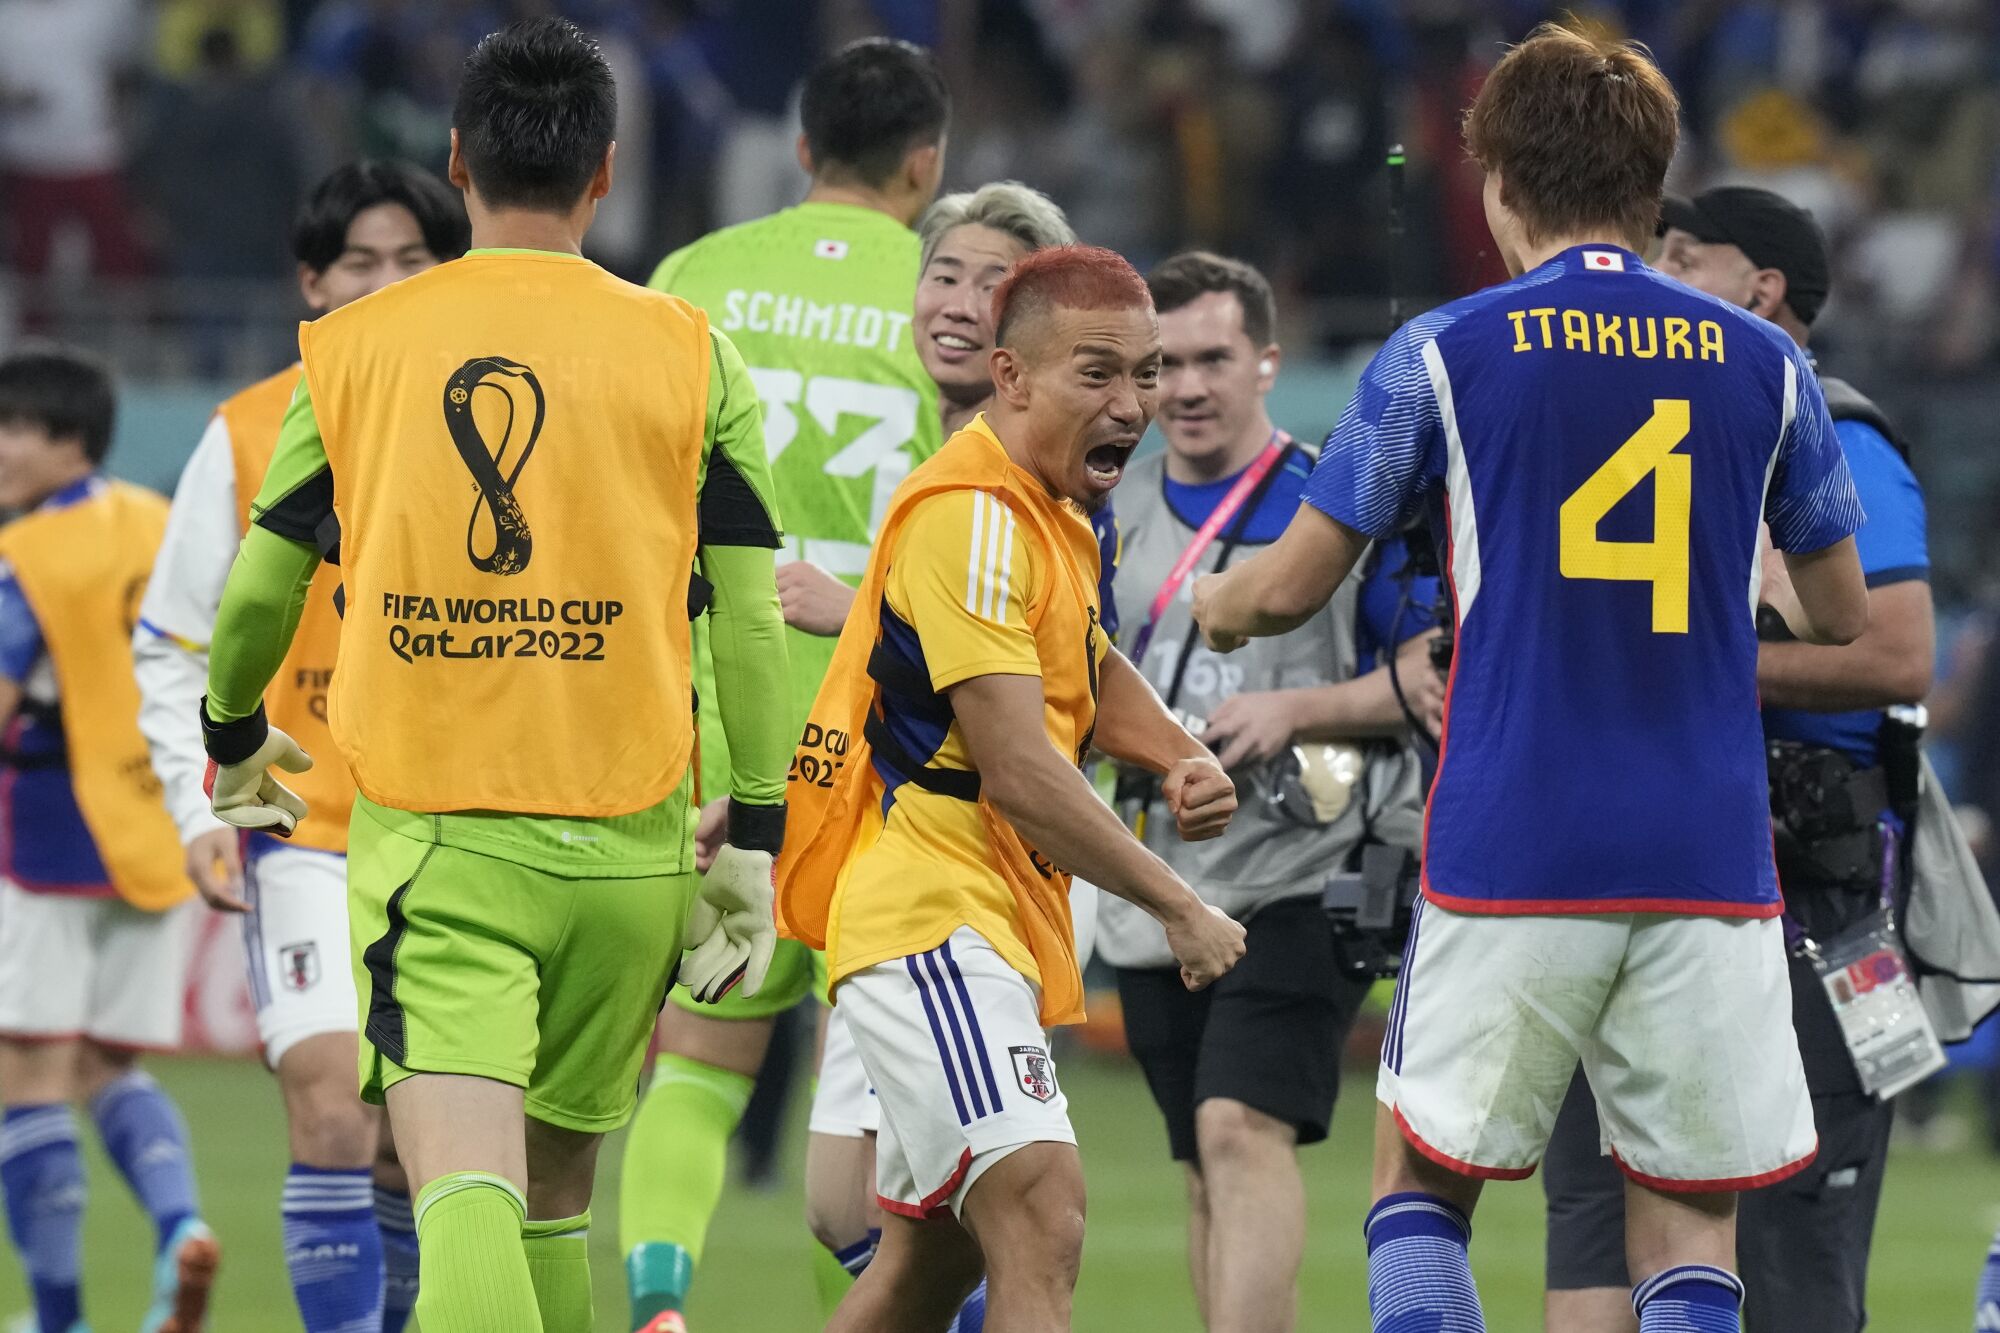 Japan's players celebrate after upsetting Germany at the Khalifa International Stadium in Doha, Qatar